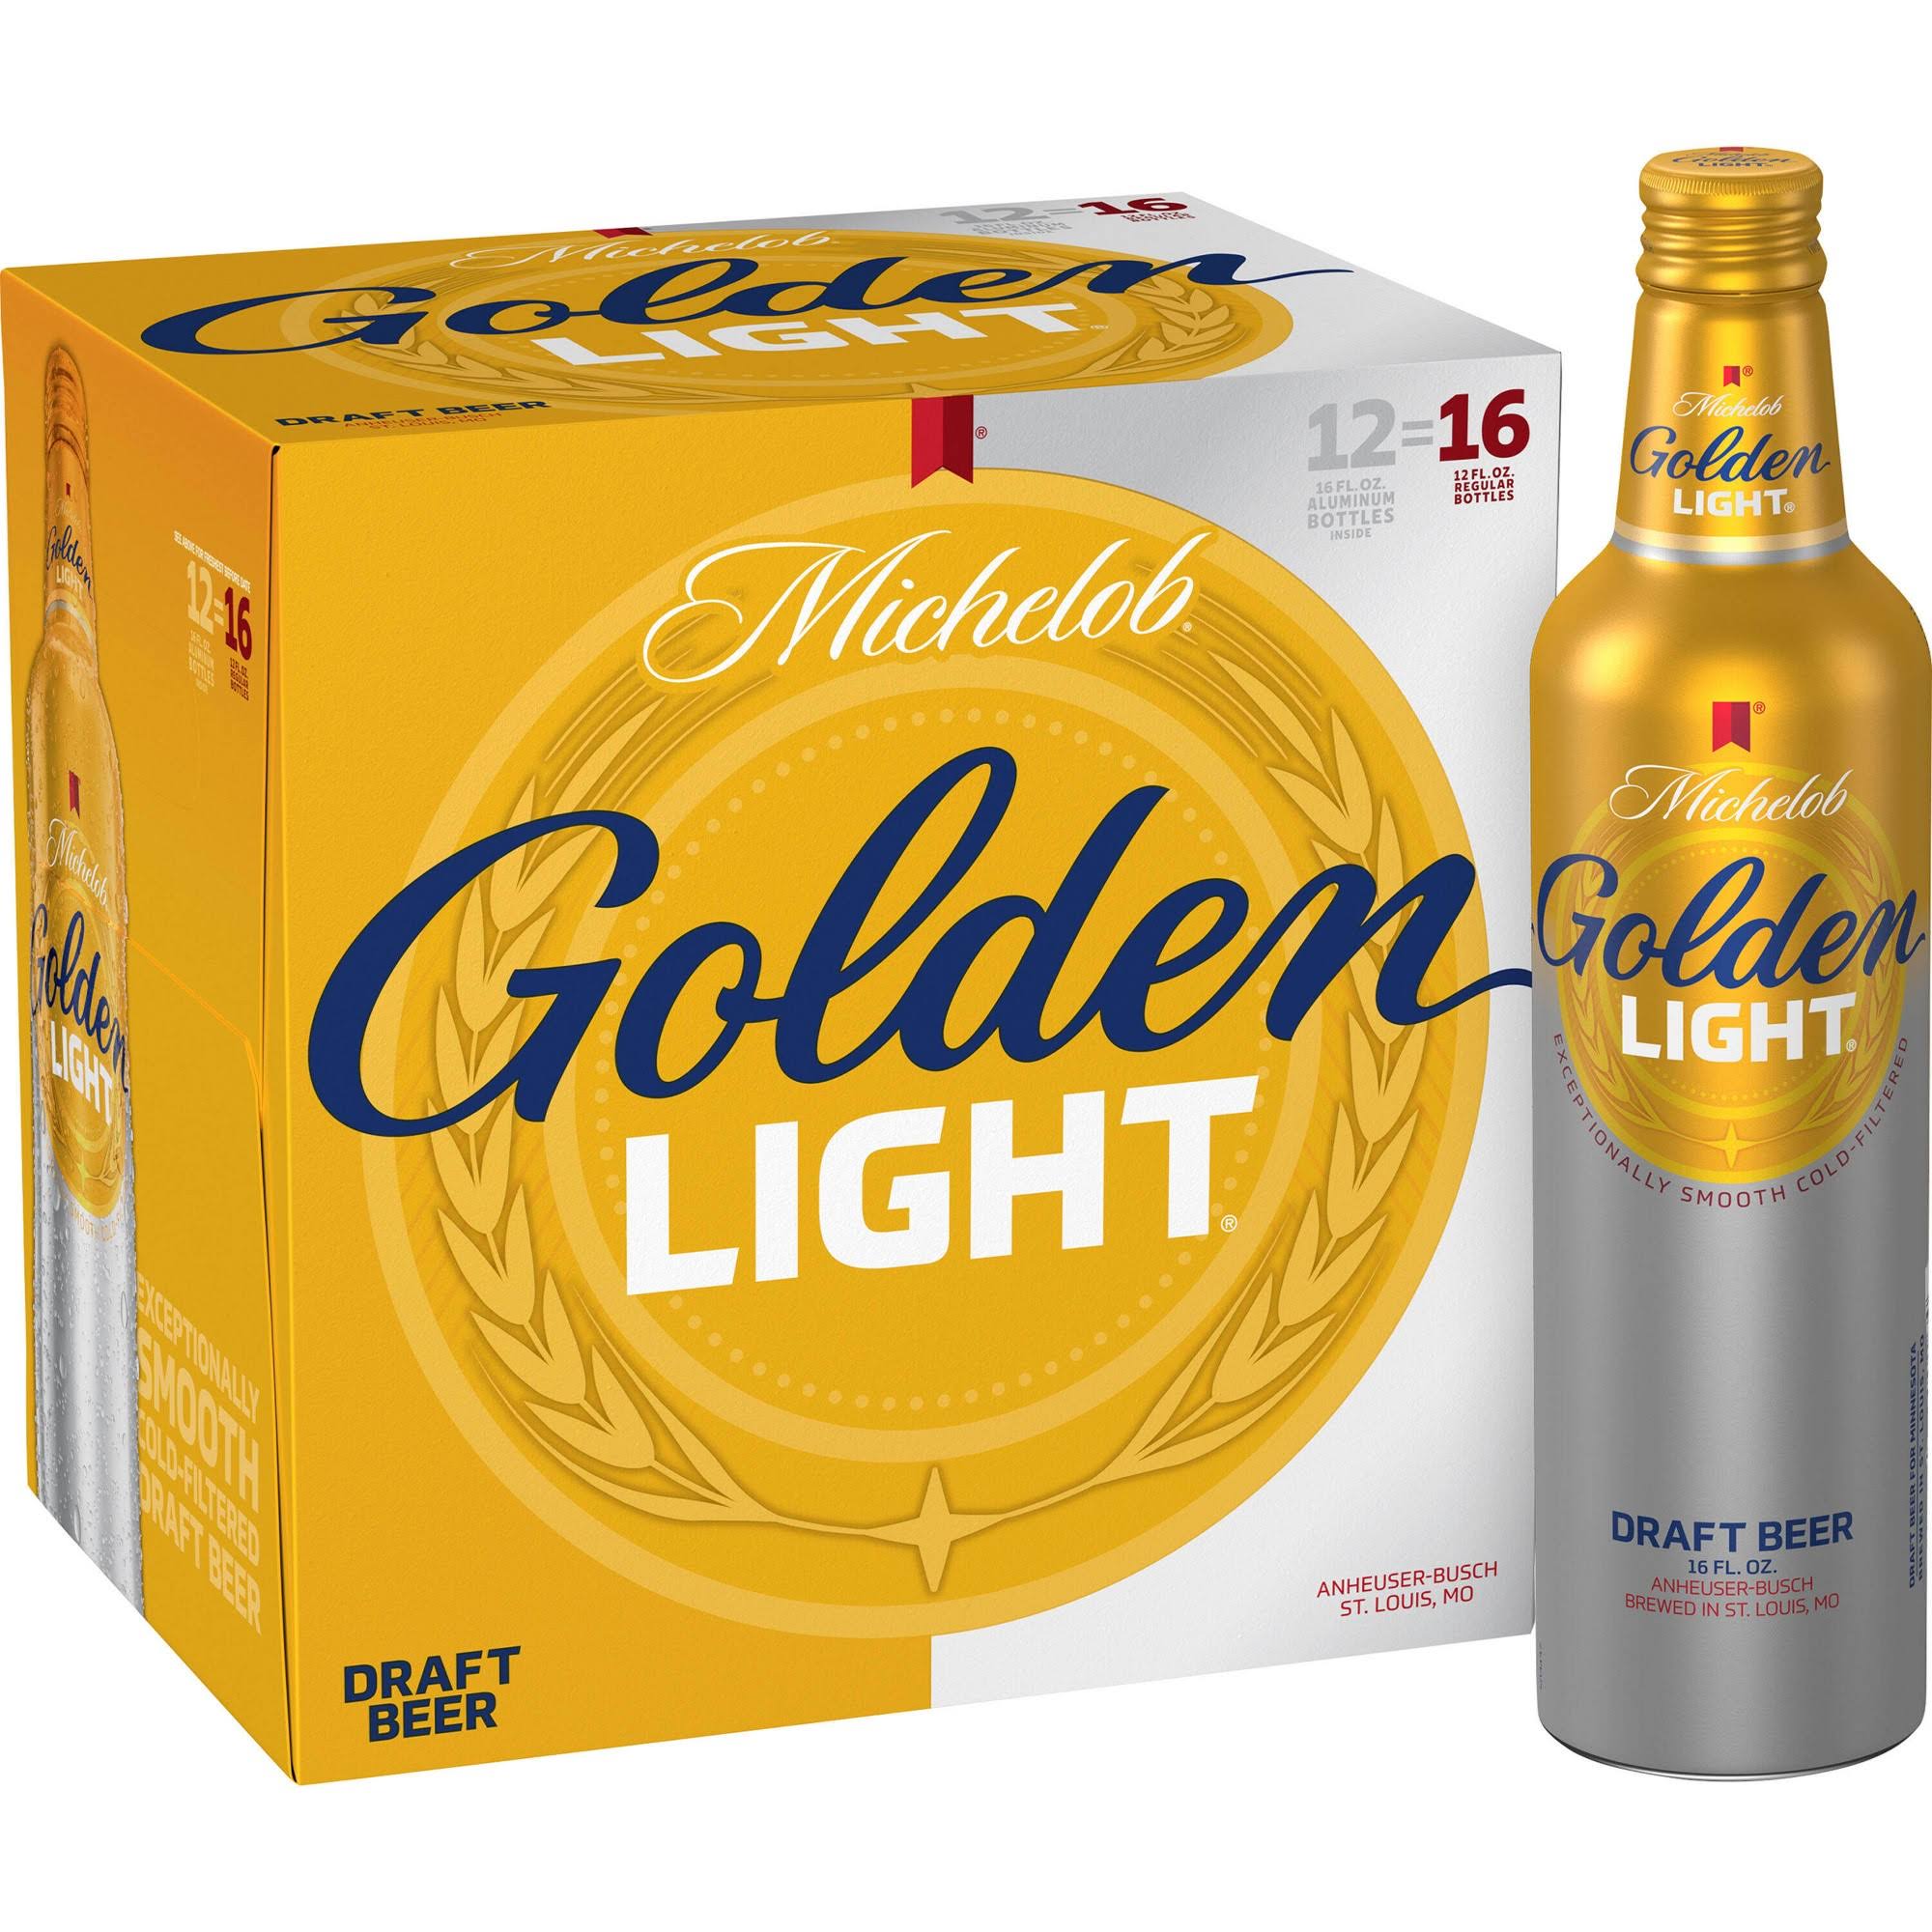 Michelob Golden Light Draft Beer - 16 fl oz